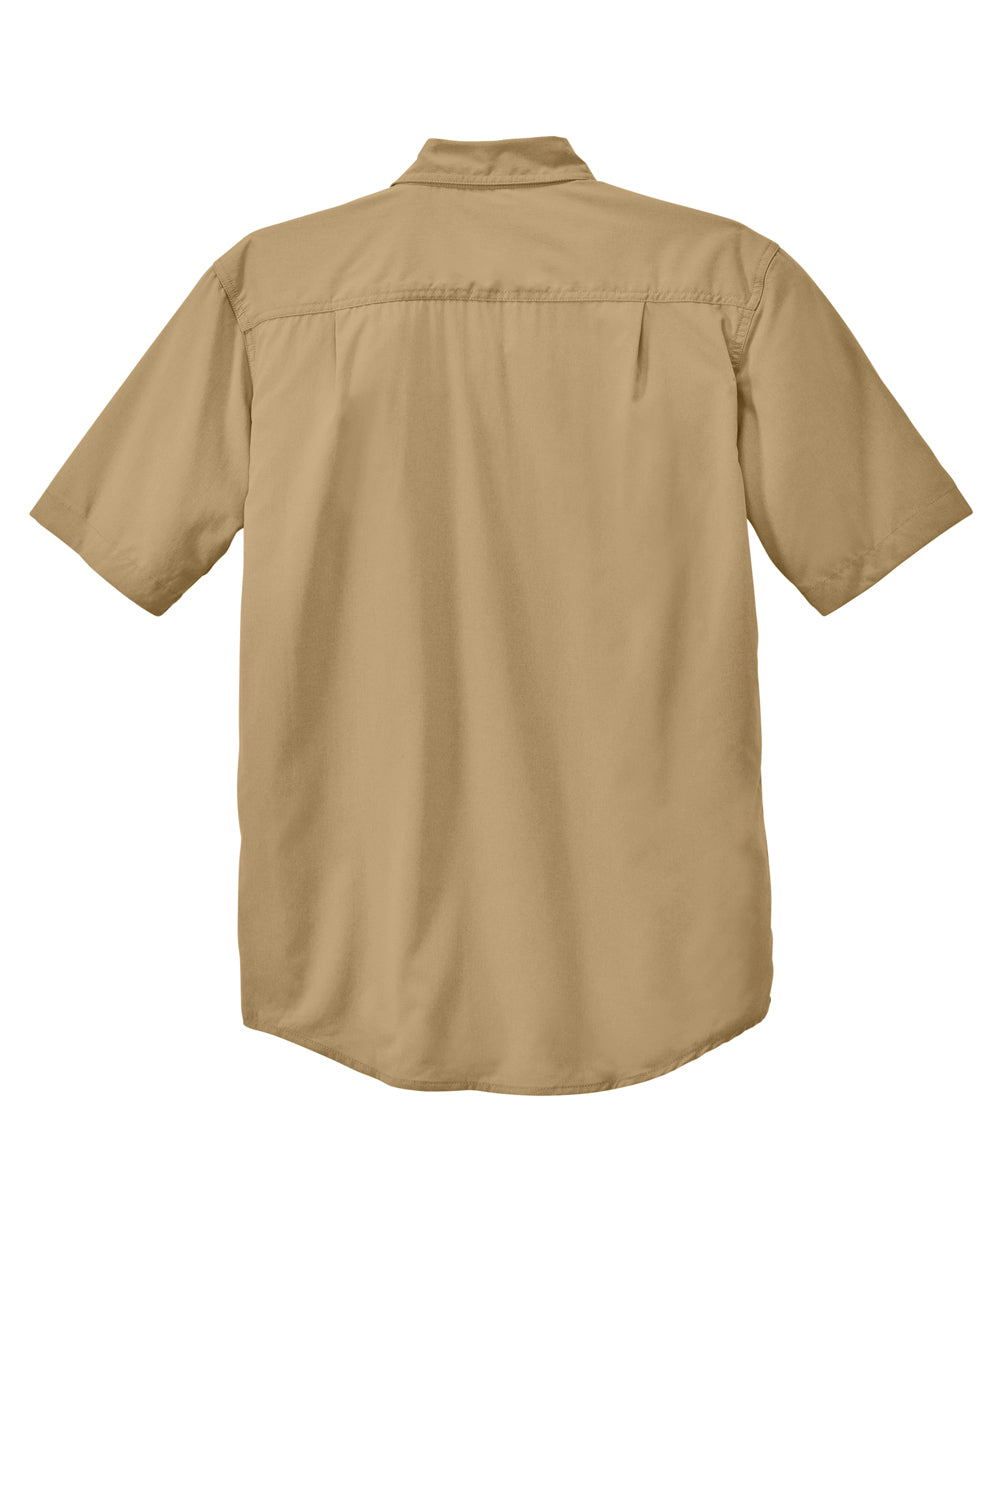 Carhartt CT105292 Mens Force Moisture Wicking Short Sleeve Button Down Shirt w/ Double Pockets Dark Khaki Brown Flat Back